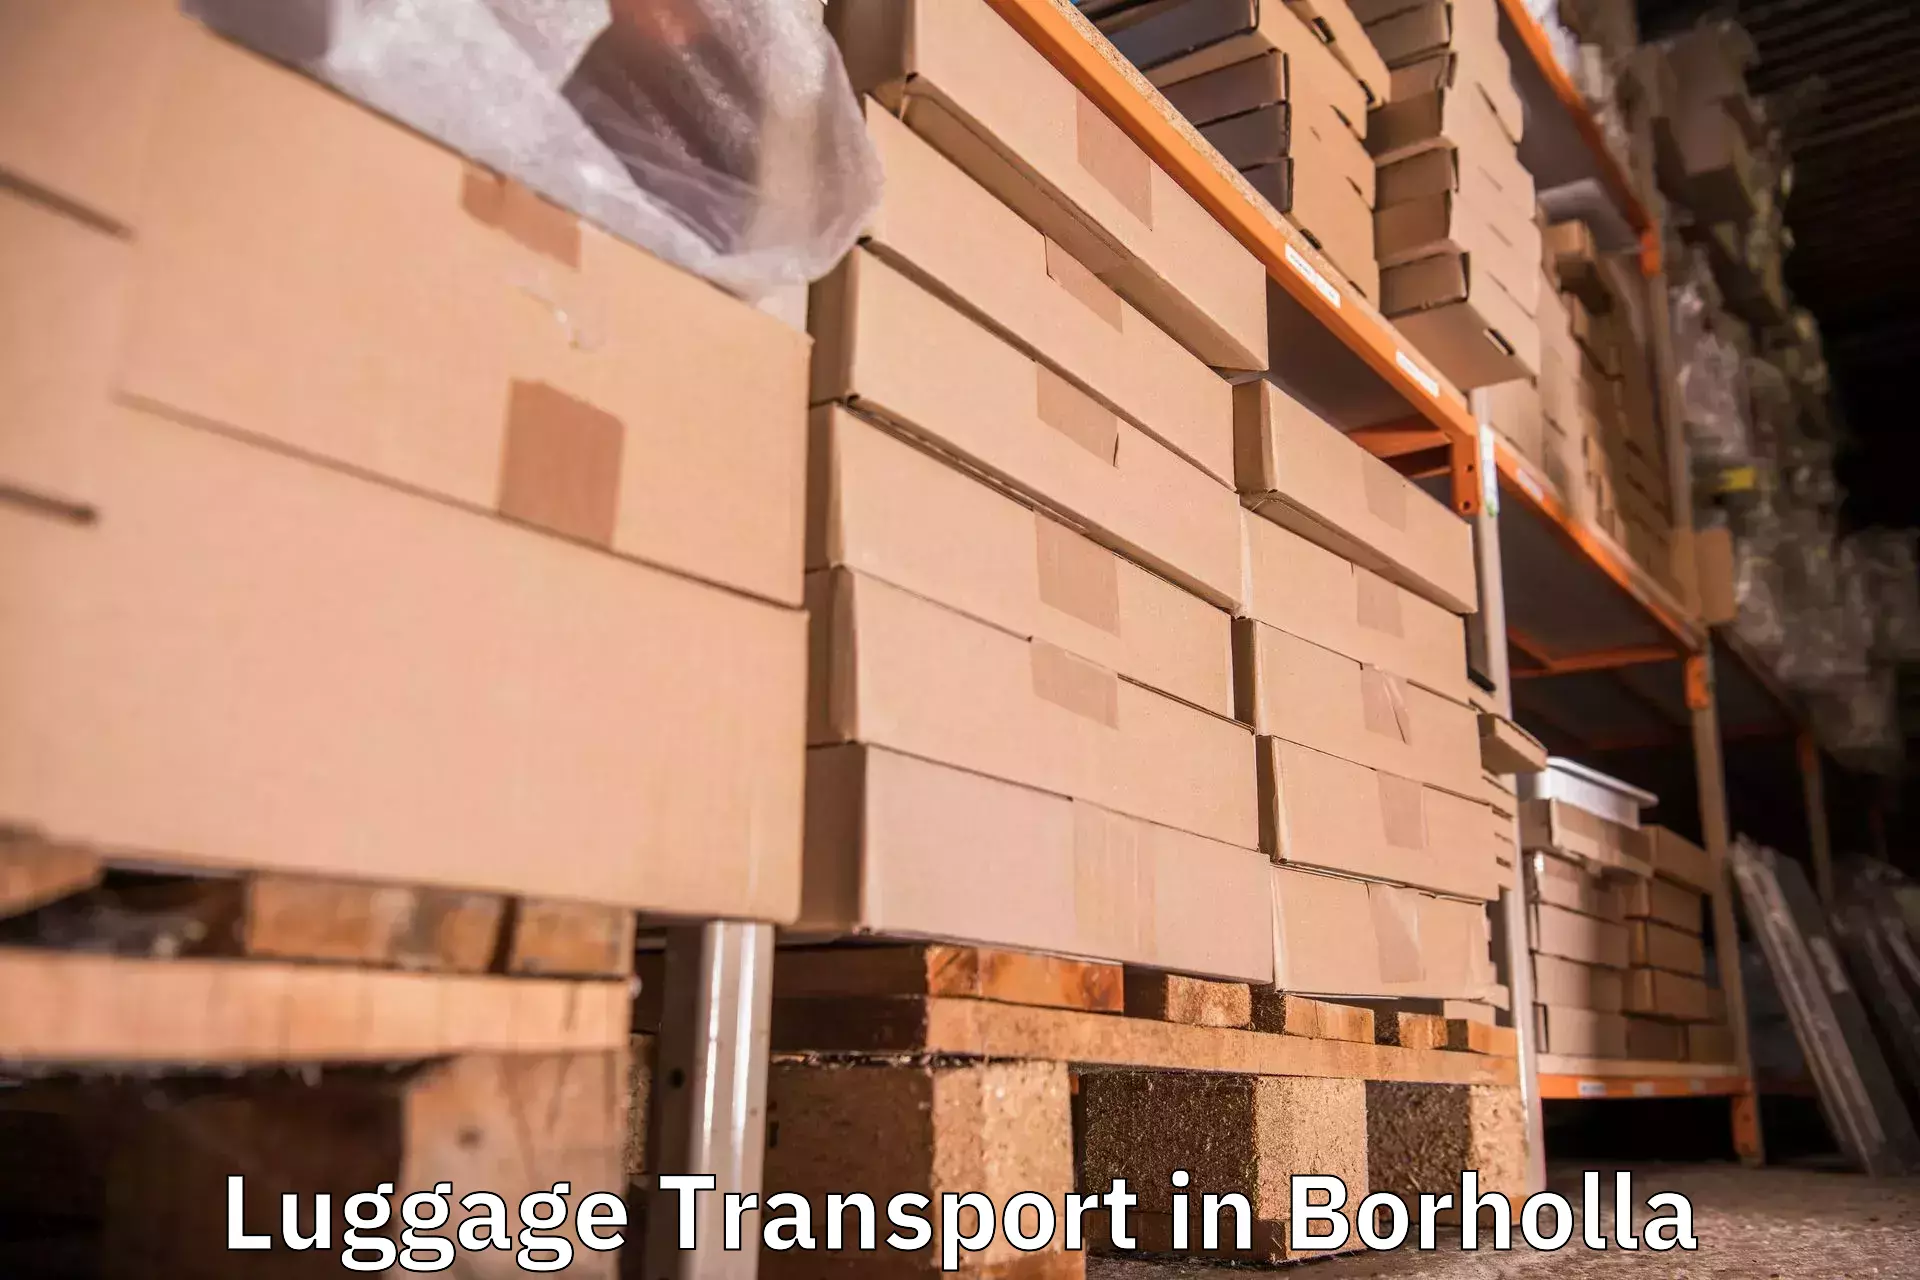 Luggage delivery estimate in Borholla